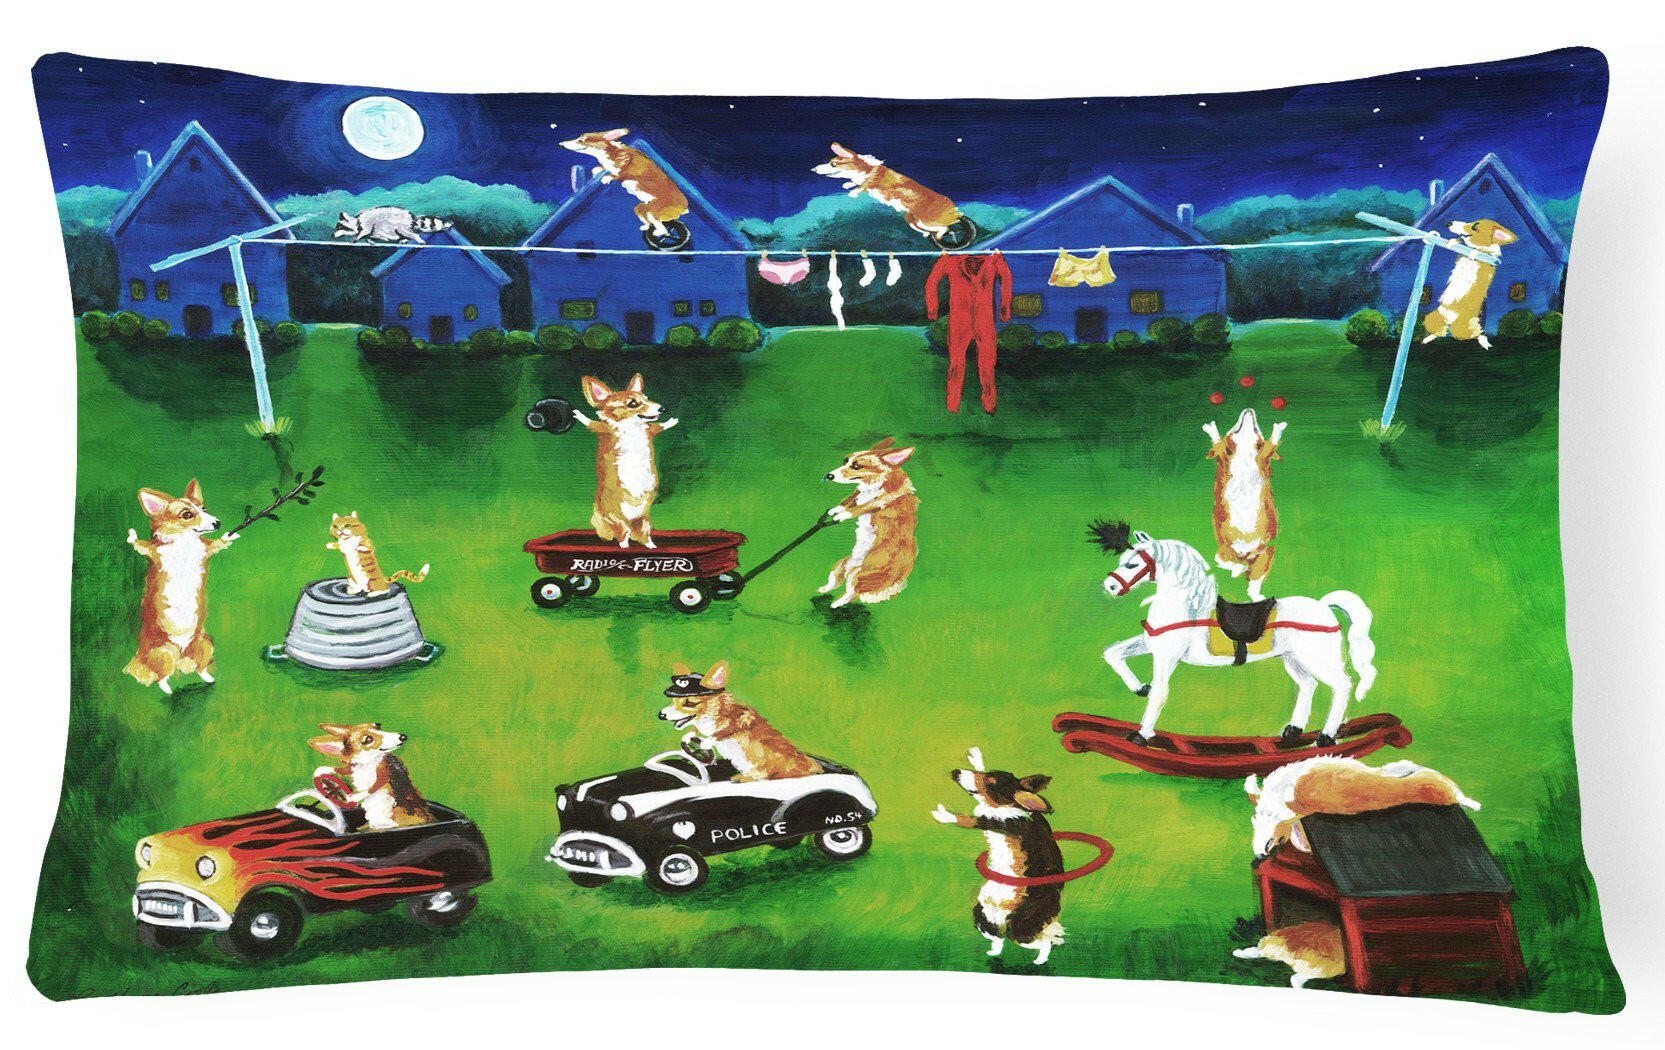 Corgi Backyard Circus Fabric Decorative Pillow 7403PW1216 by Caroline's Treasures